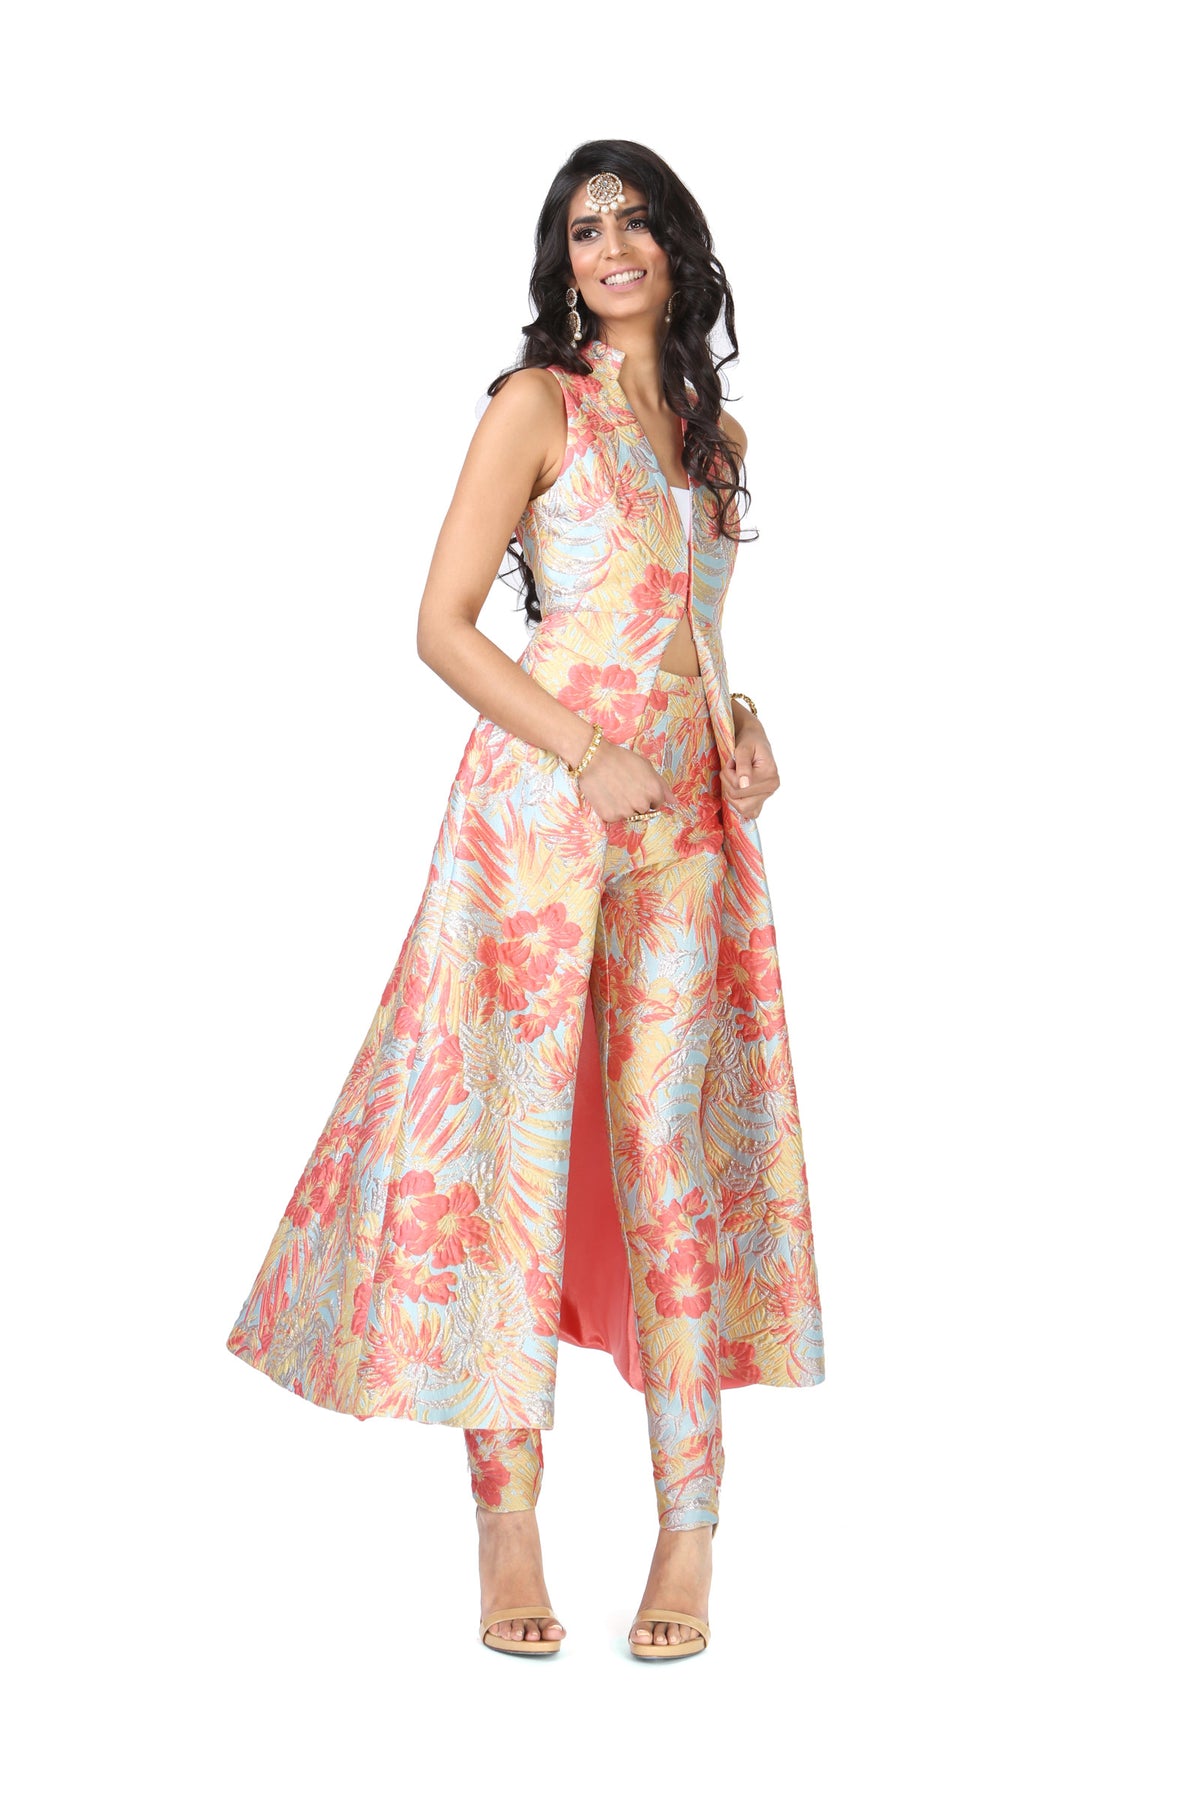 CHANDRA Floral Palm Jacket Dress - Front View | HARLEEN KAUR